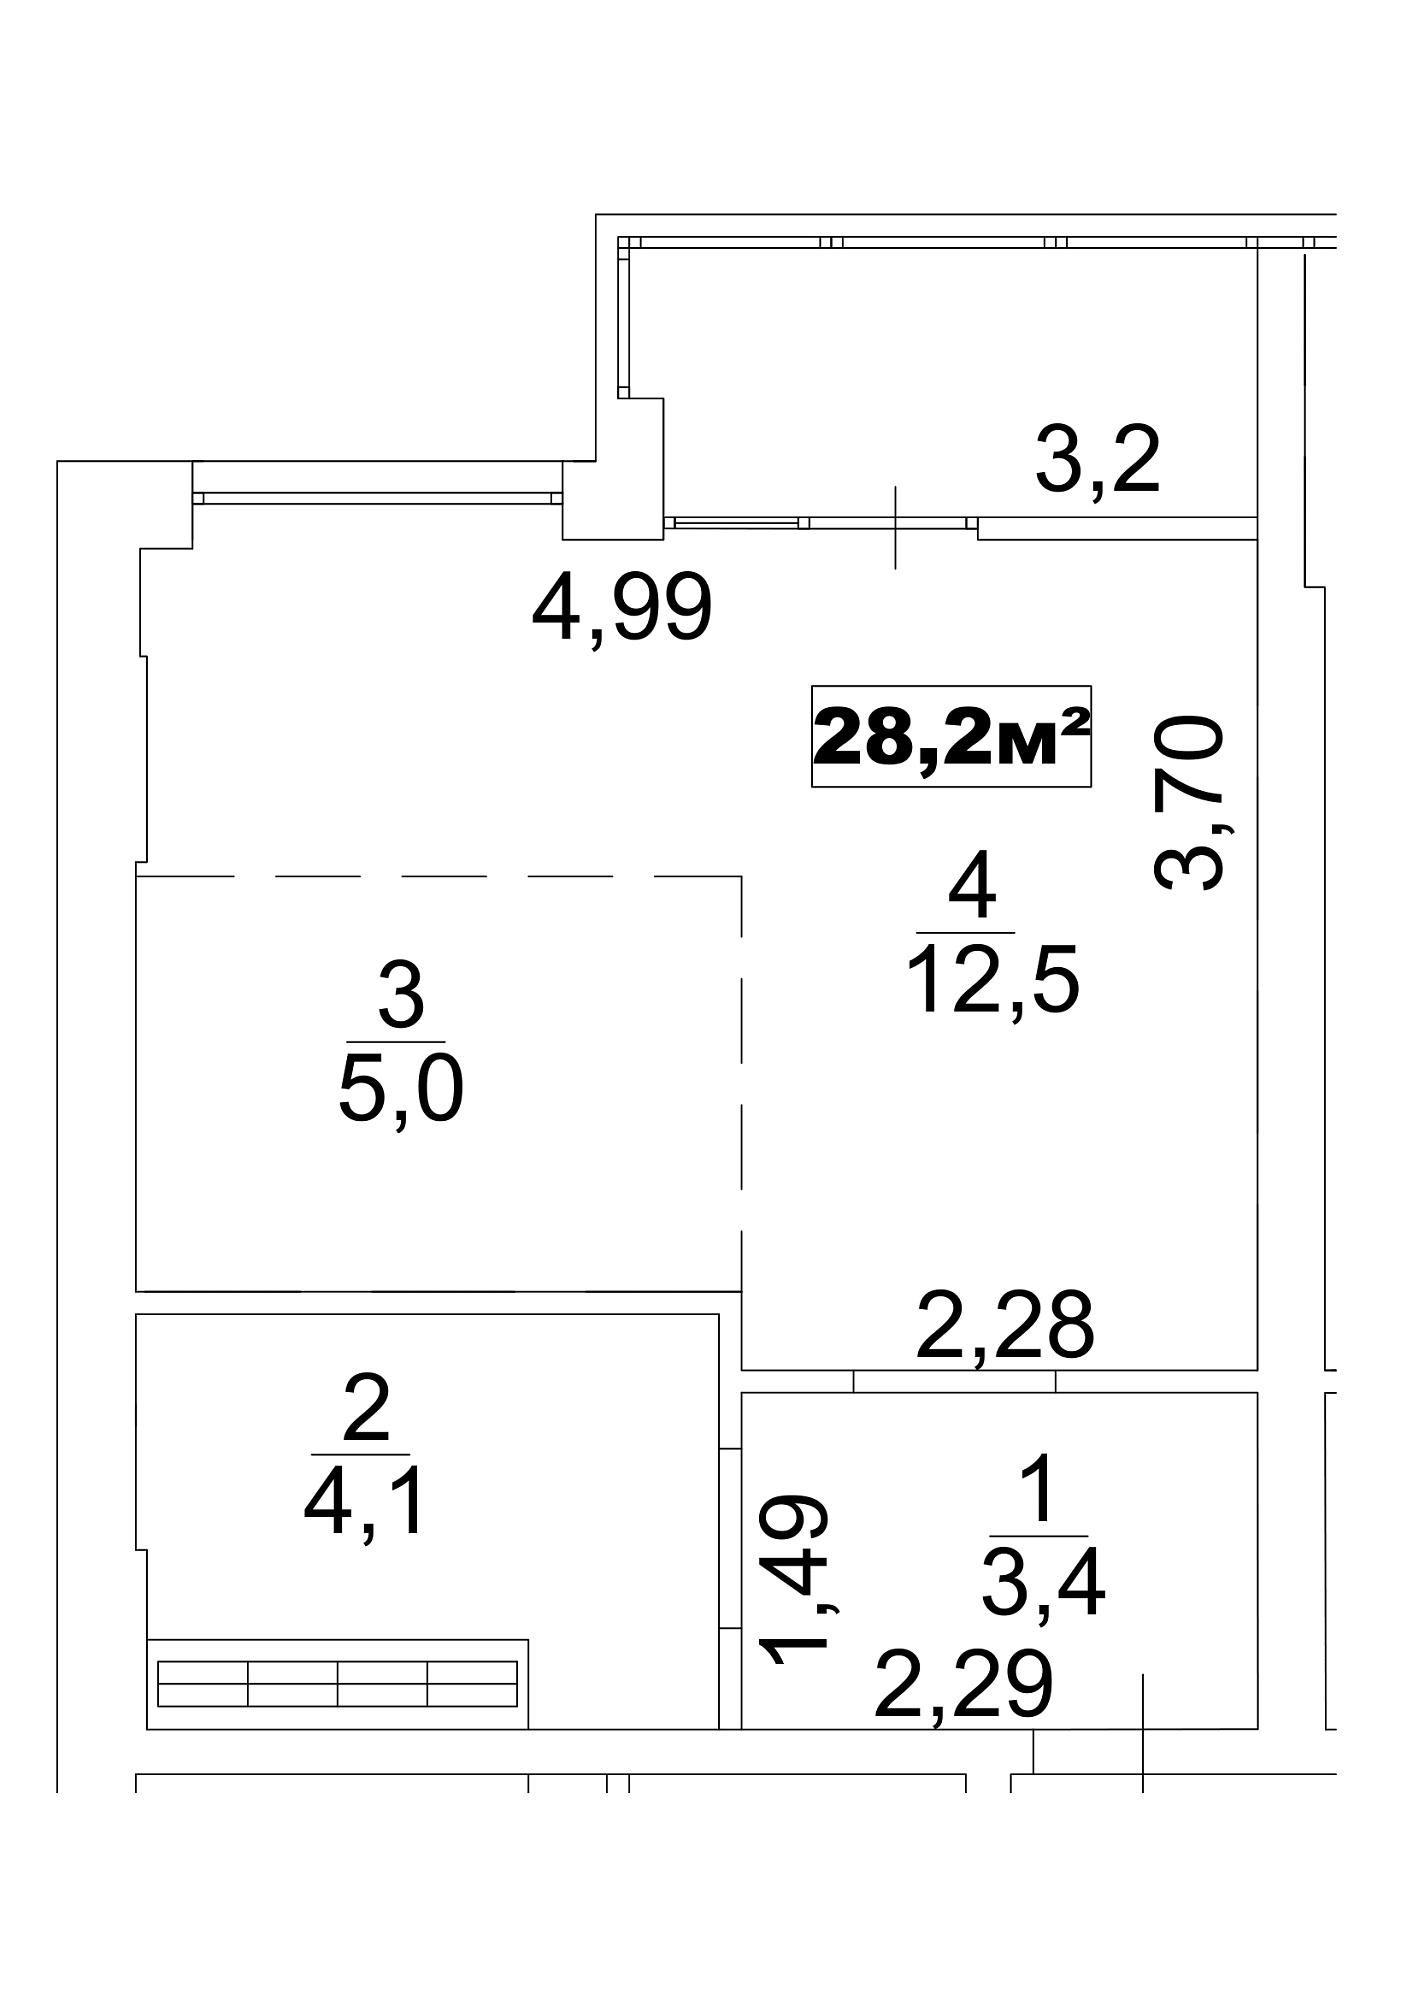 Planning Smart flats area 28.2m2, AB-13-07/0054б.